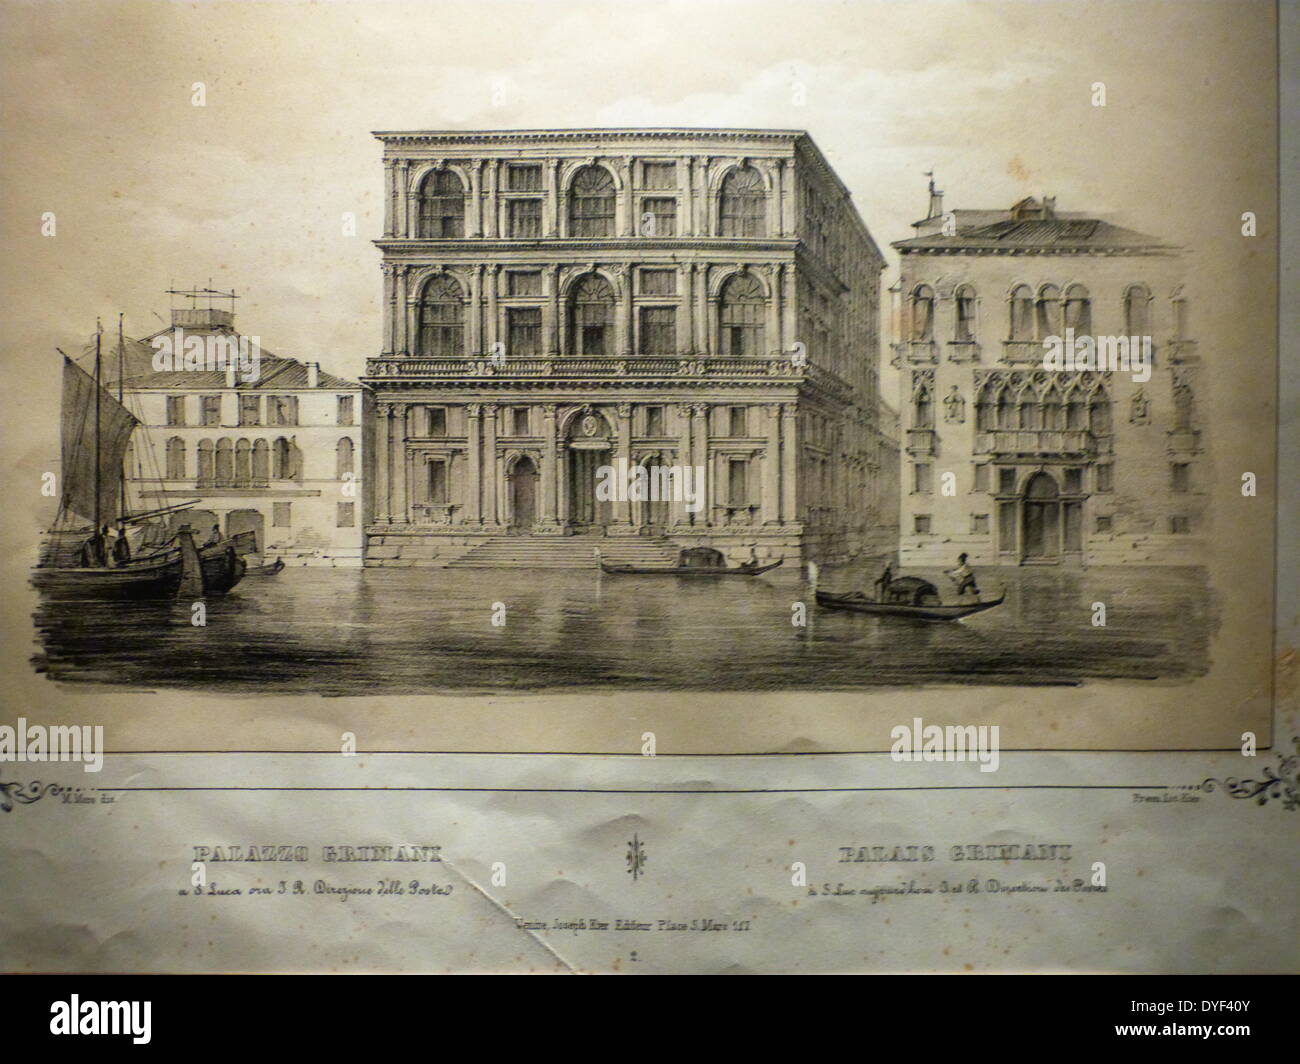 Illustration of the Palazzo Grimani. Stock Photo